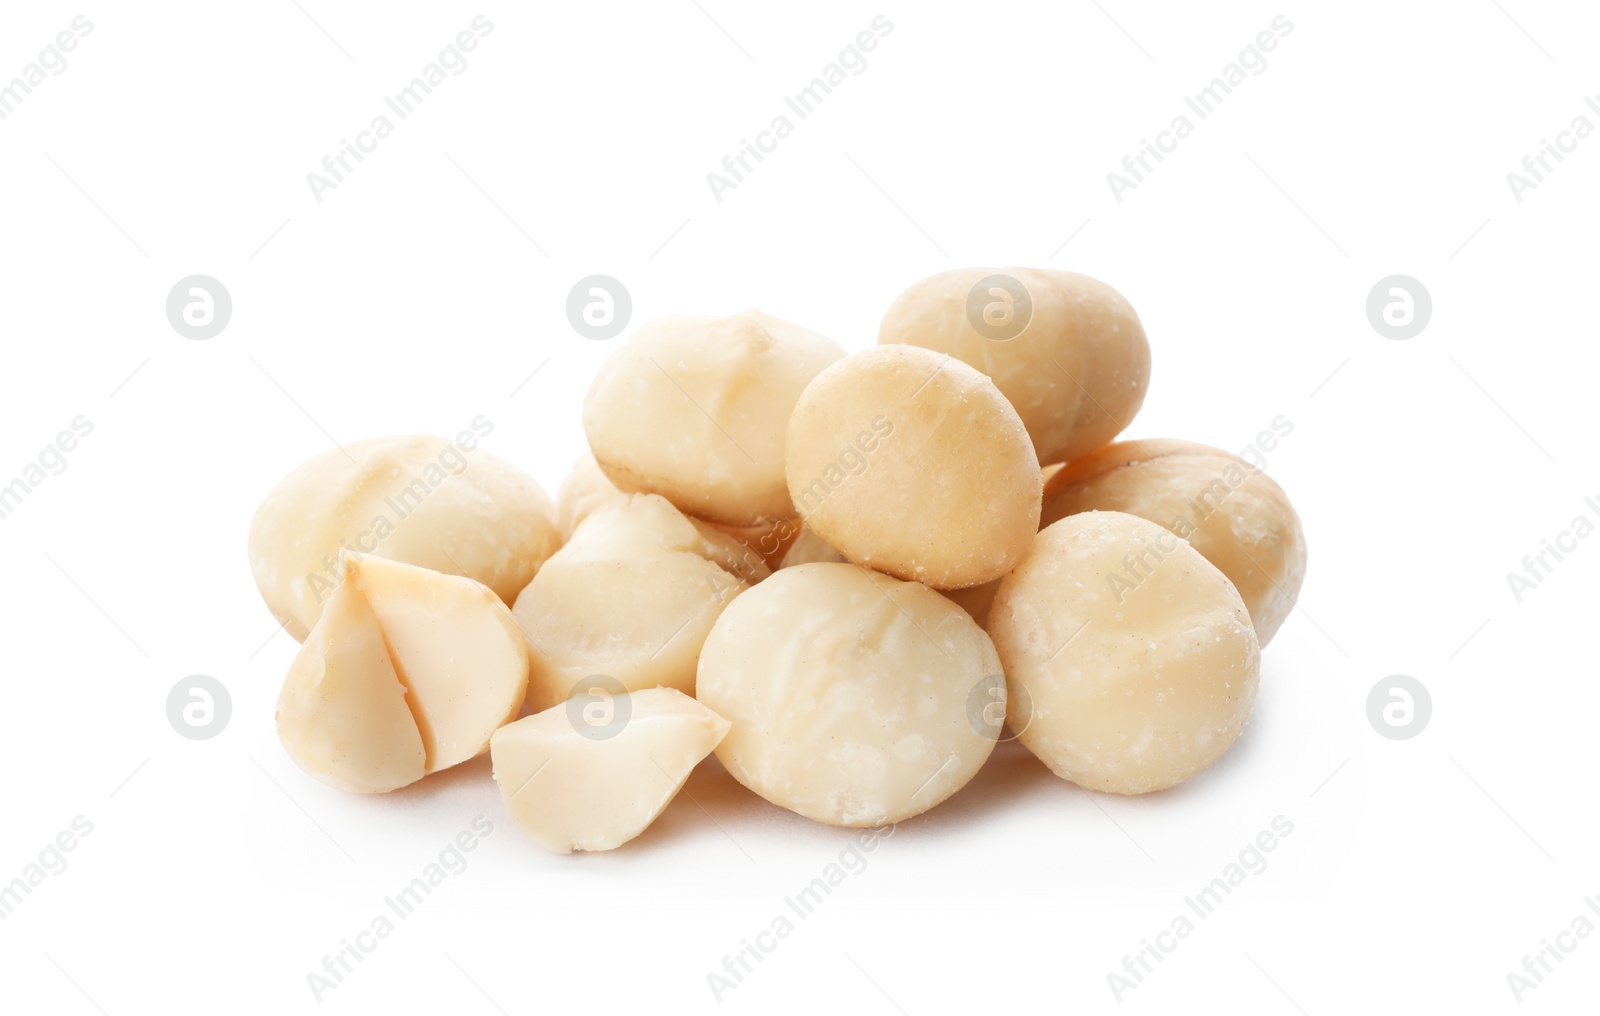 Photo of Shelled organic Macadamia nuts on white background